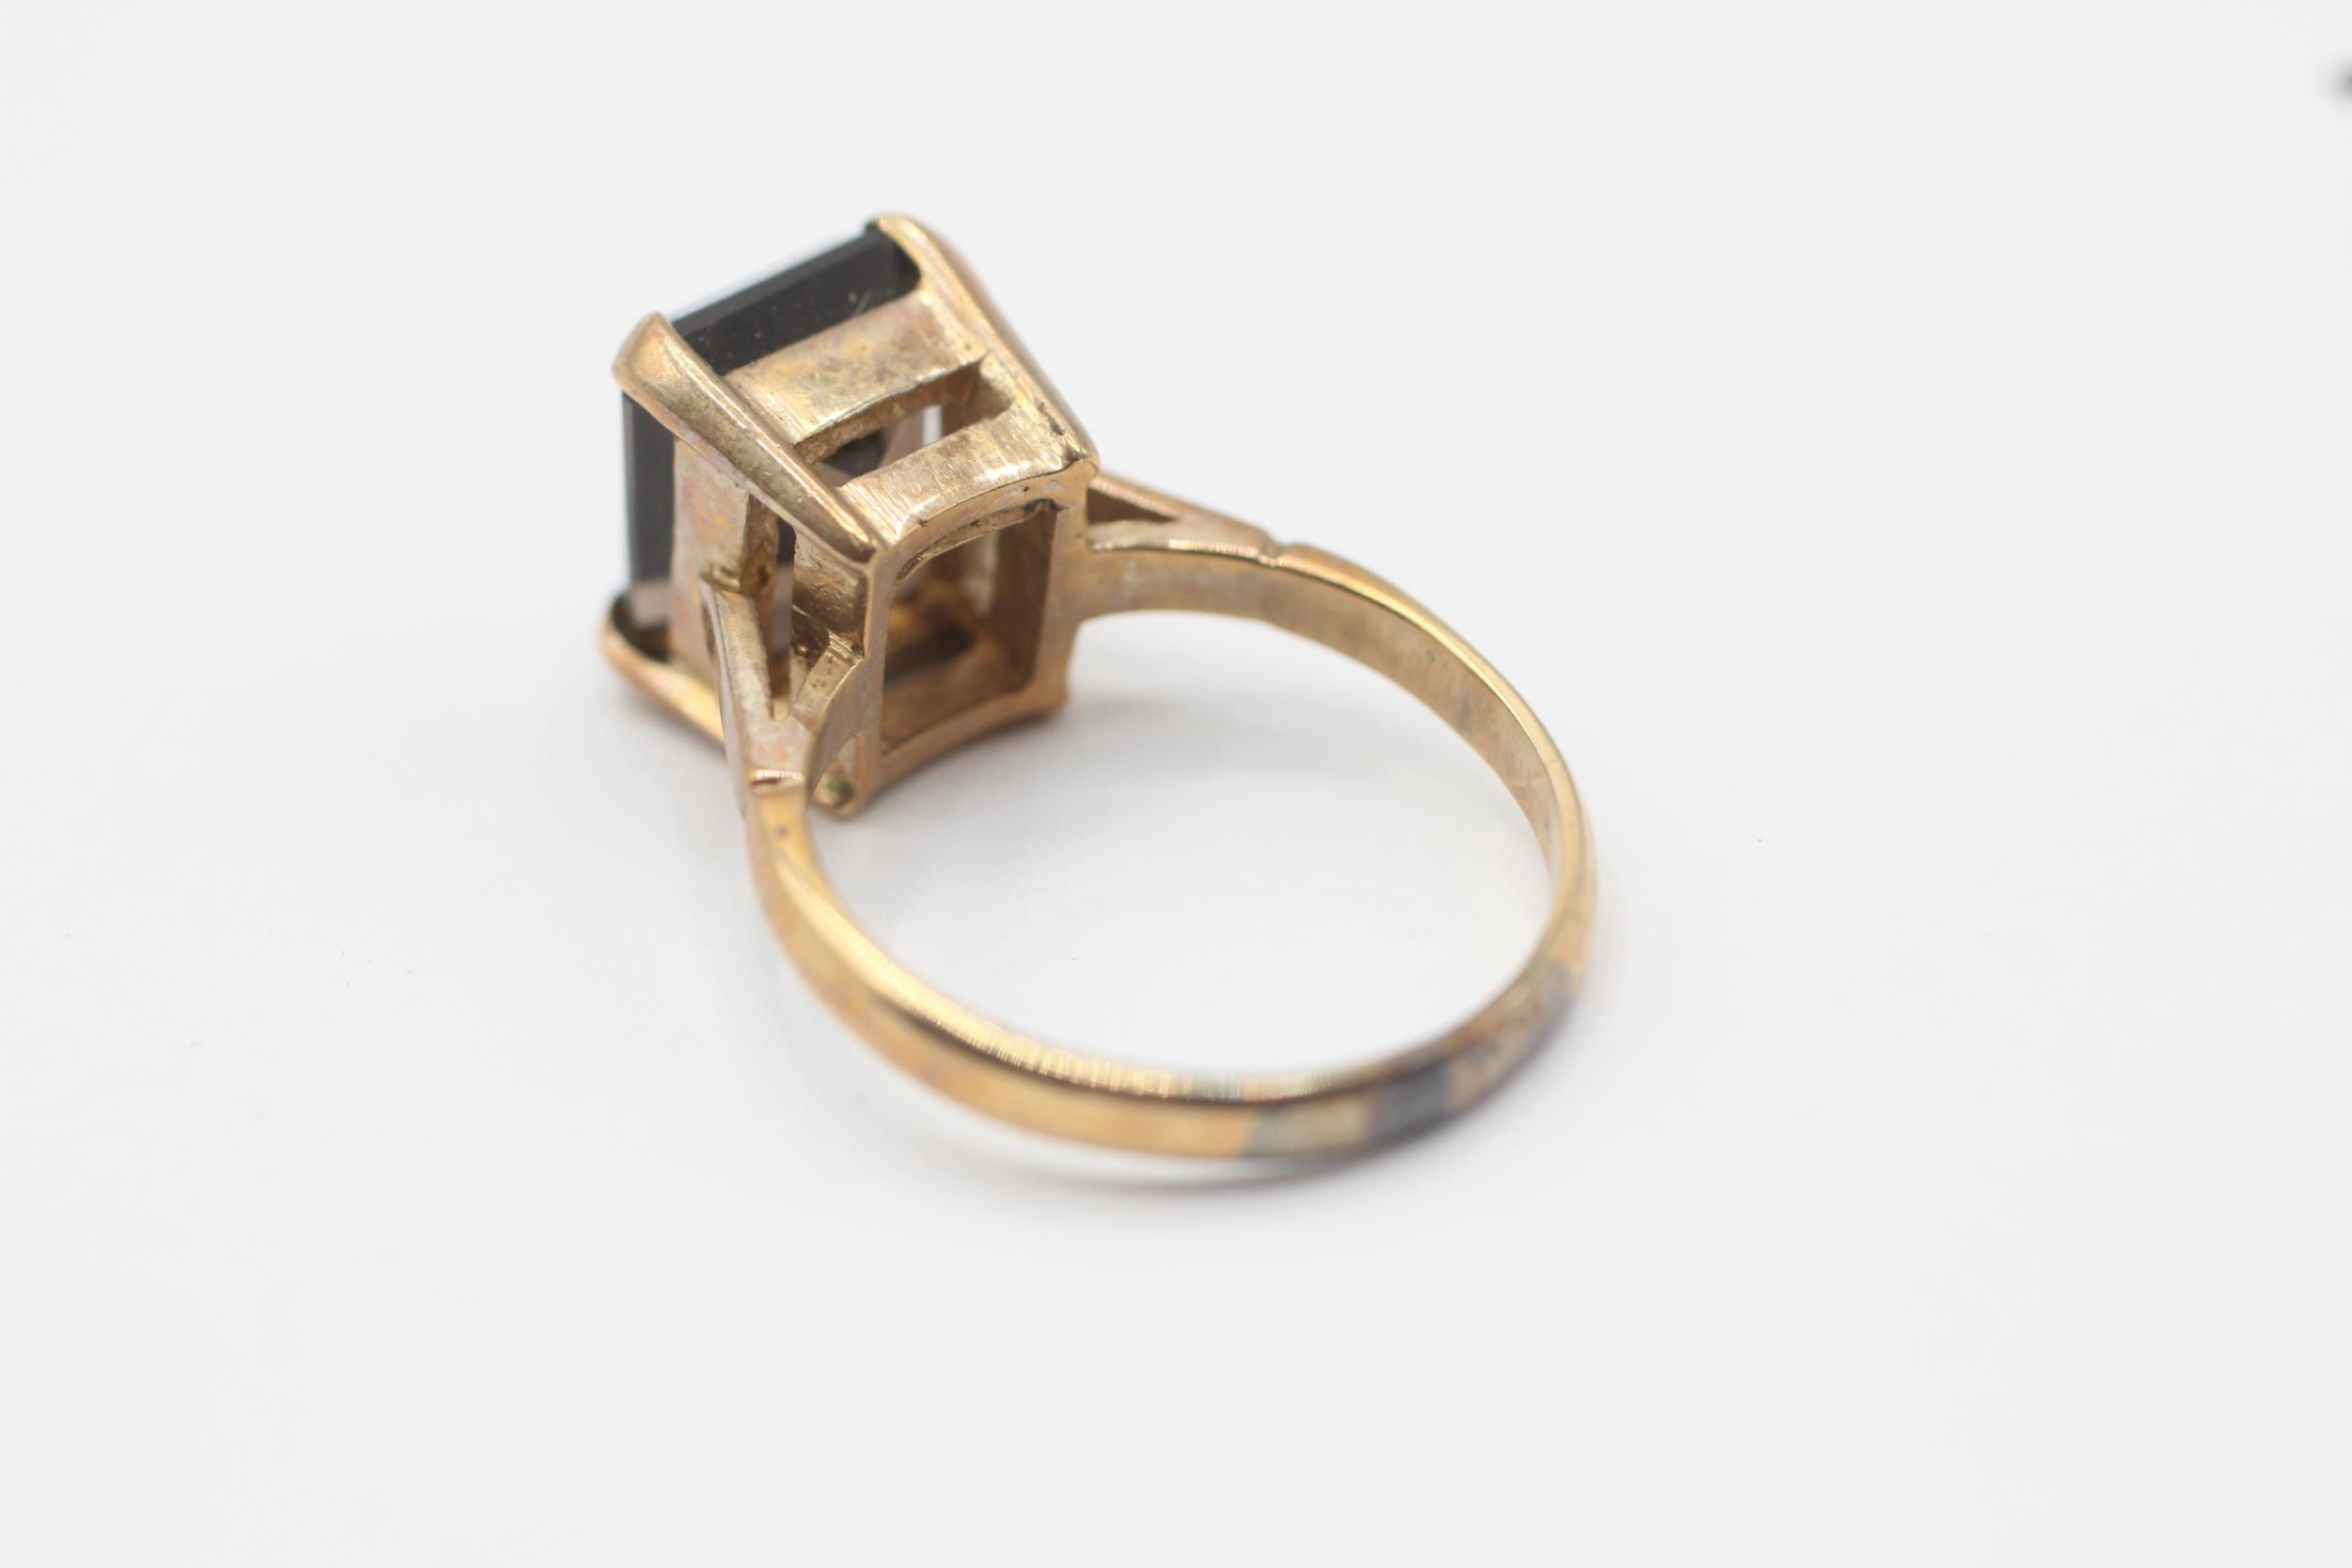 9ct gold smokey quartz single stone ring Size K 3.6 g - Image 3 of 6